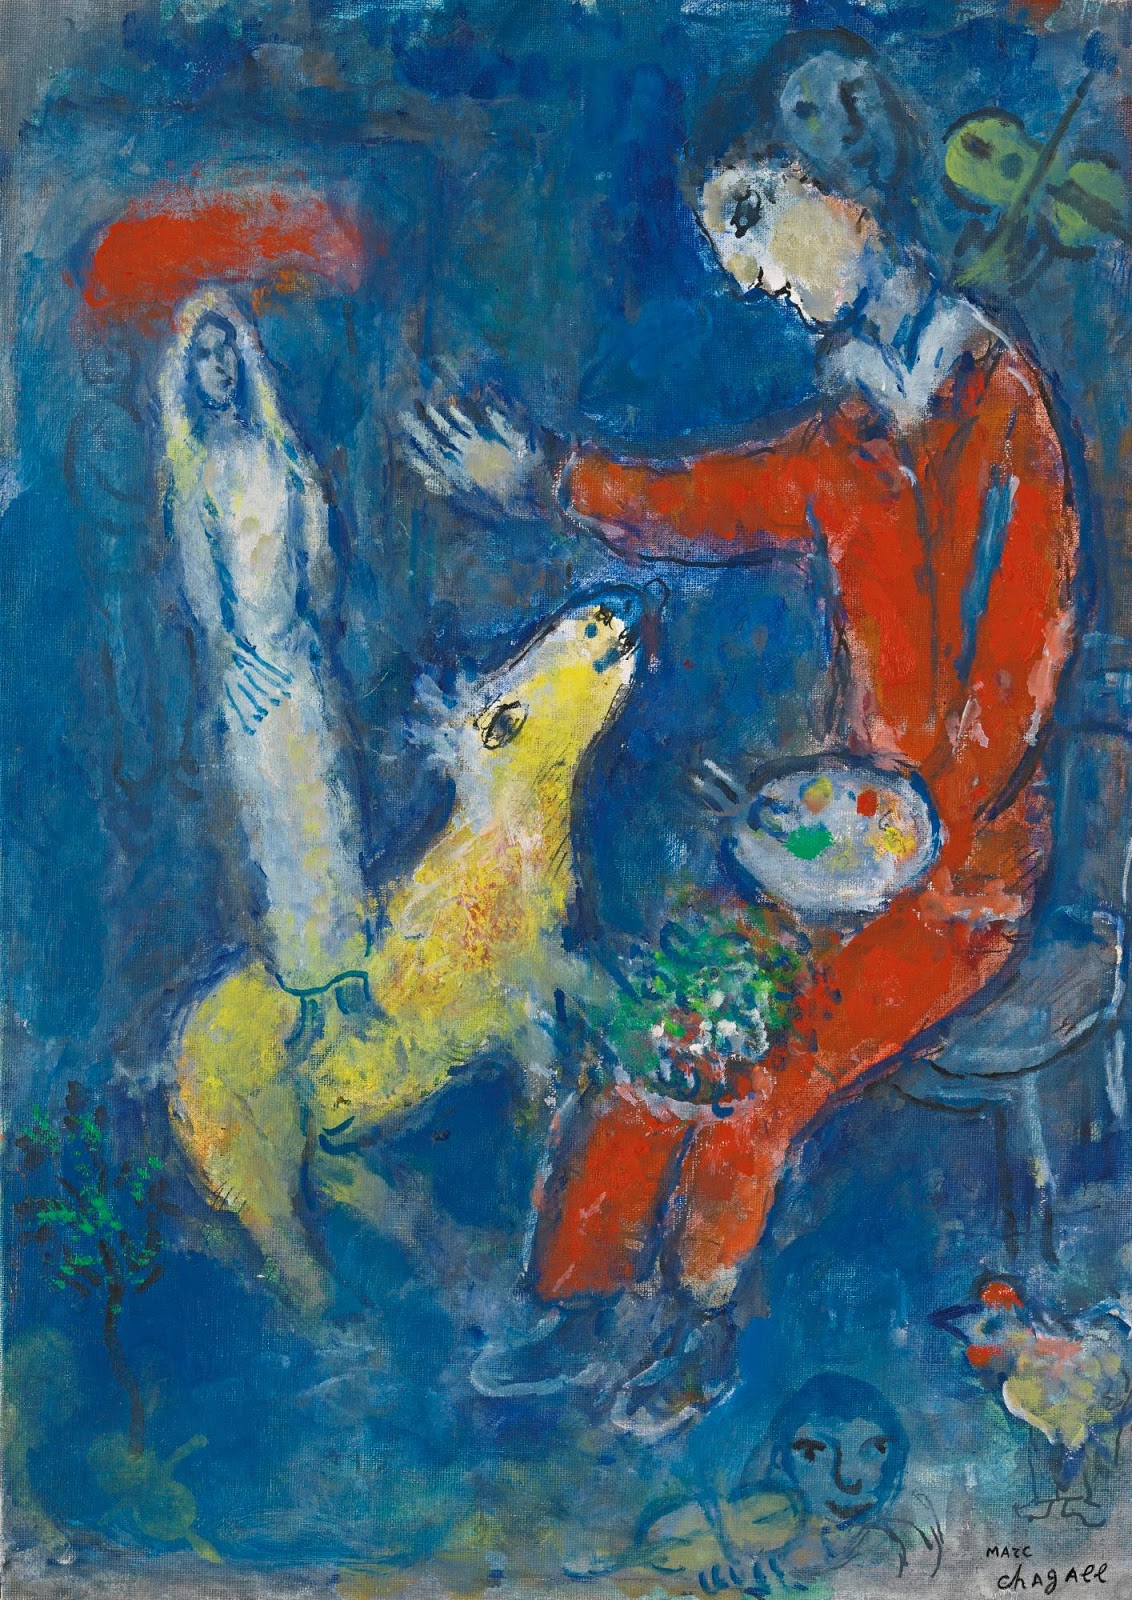 Marc+Chagall-1887-1985 (55).jpg